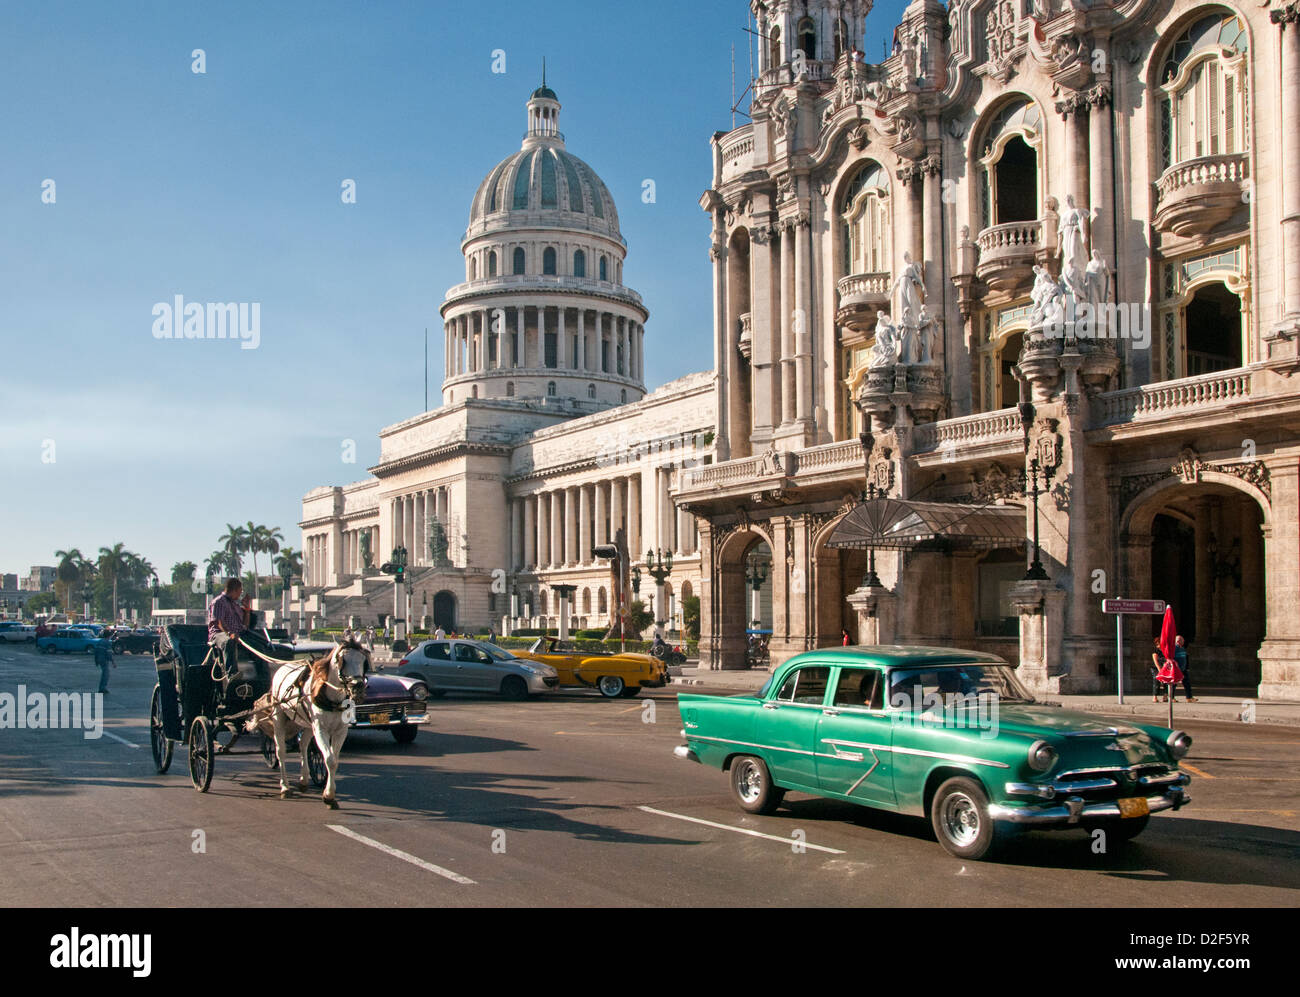 Classic 1950's American Car, The Capitolio Building & Gran Teatro de la Habana, Paseo de Marti, Habana Vieja, Havana, Cuba Stock Photo